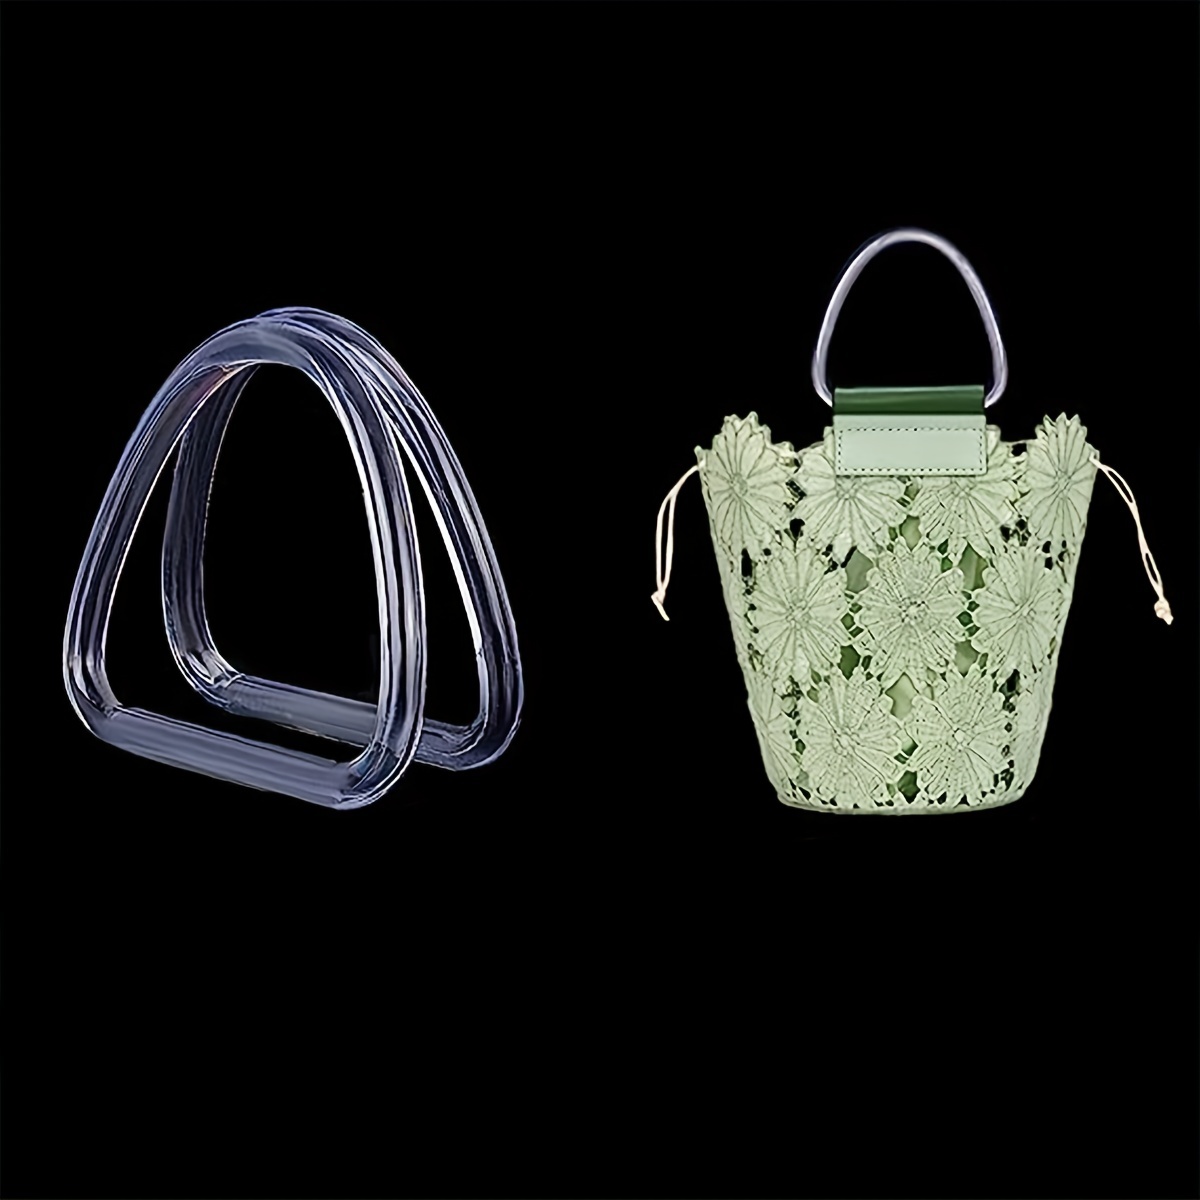 2Pcs D-shaped Bag Handle Plastic/Wood DIY Crocheted Handbag